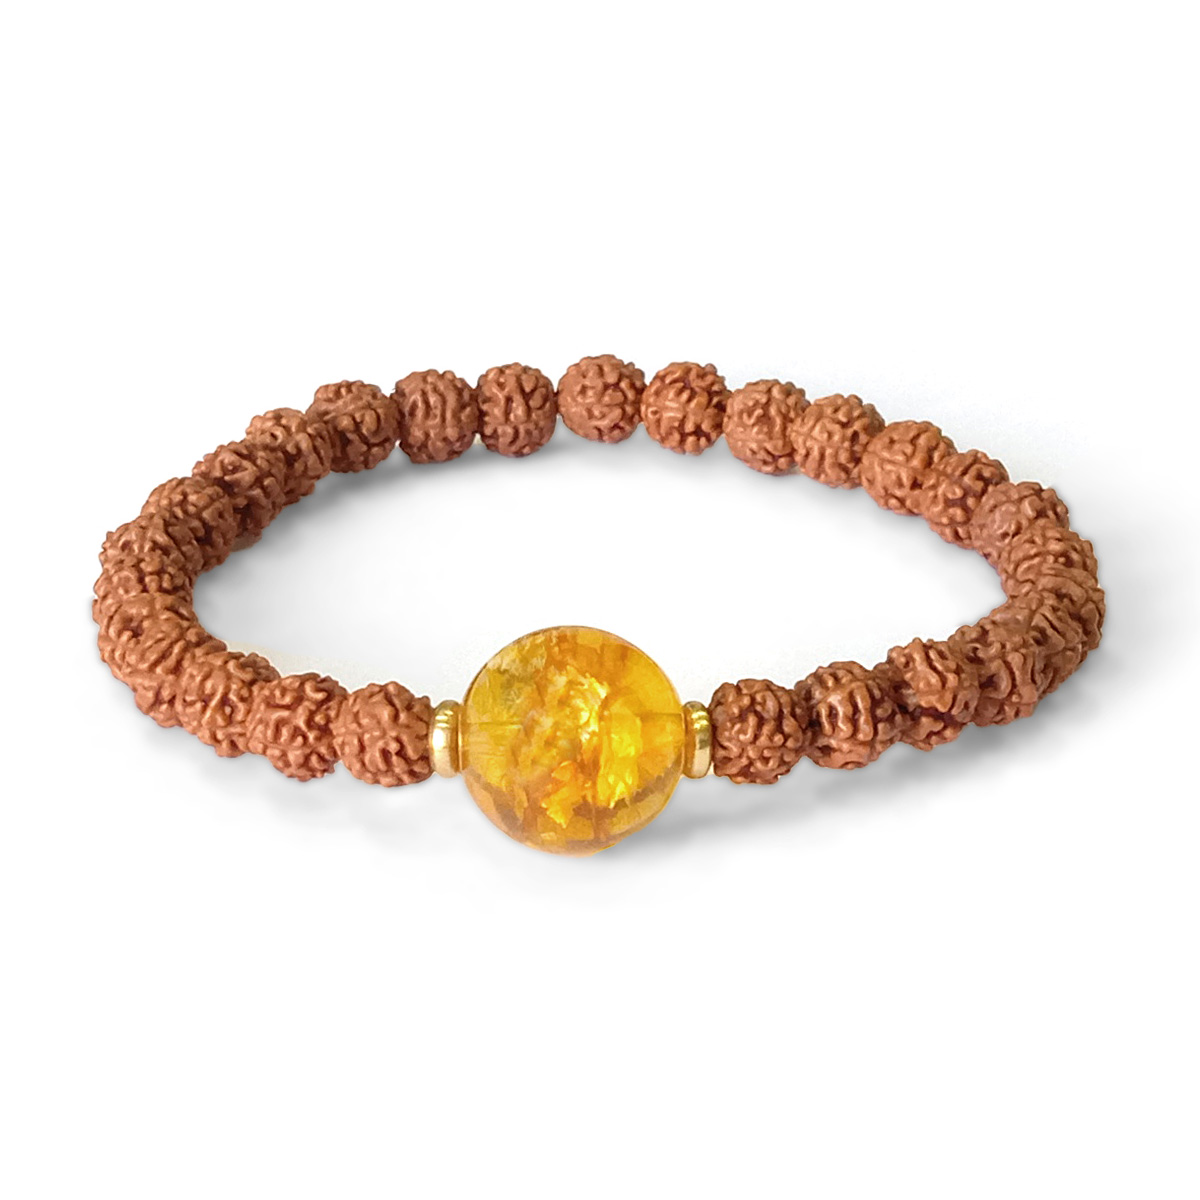 Premium Tibetan Rudraksha Bracelet - 